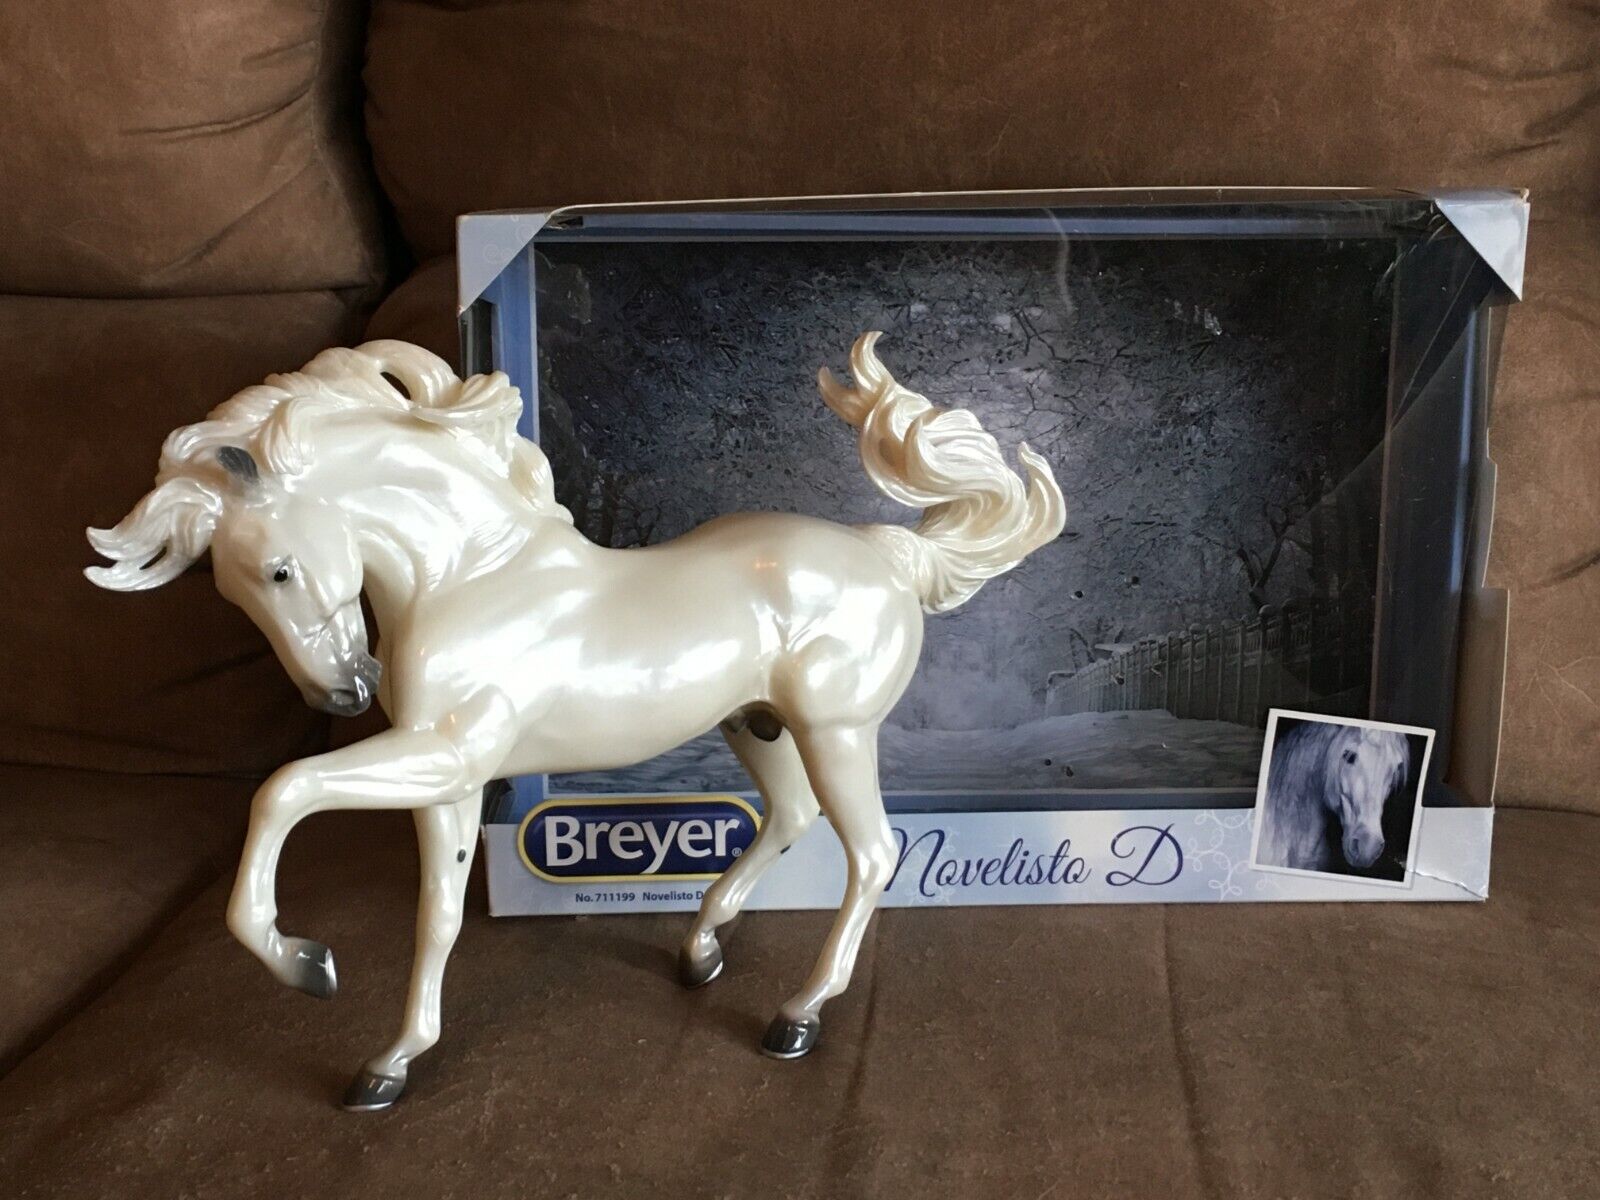 Breyer Novelisto D  (ONLY 750 Made)  Comes with Original Box - BreyerFest 2014 